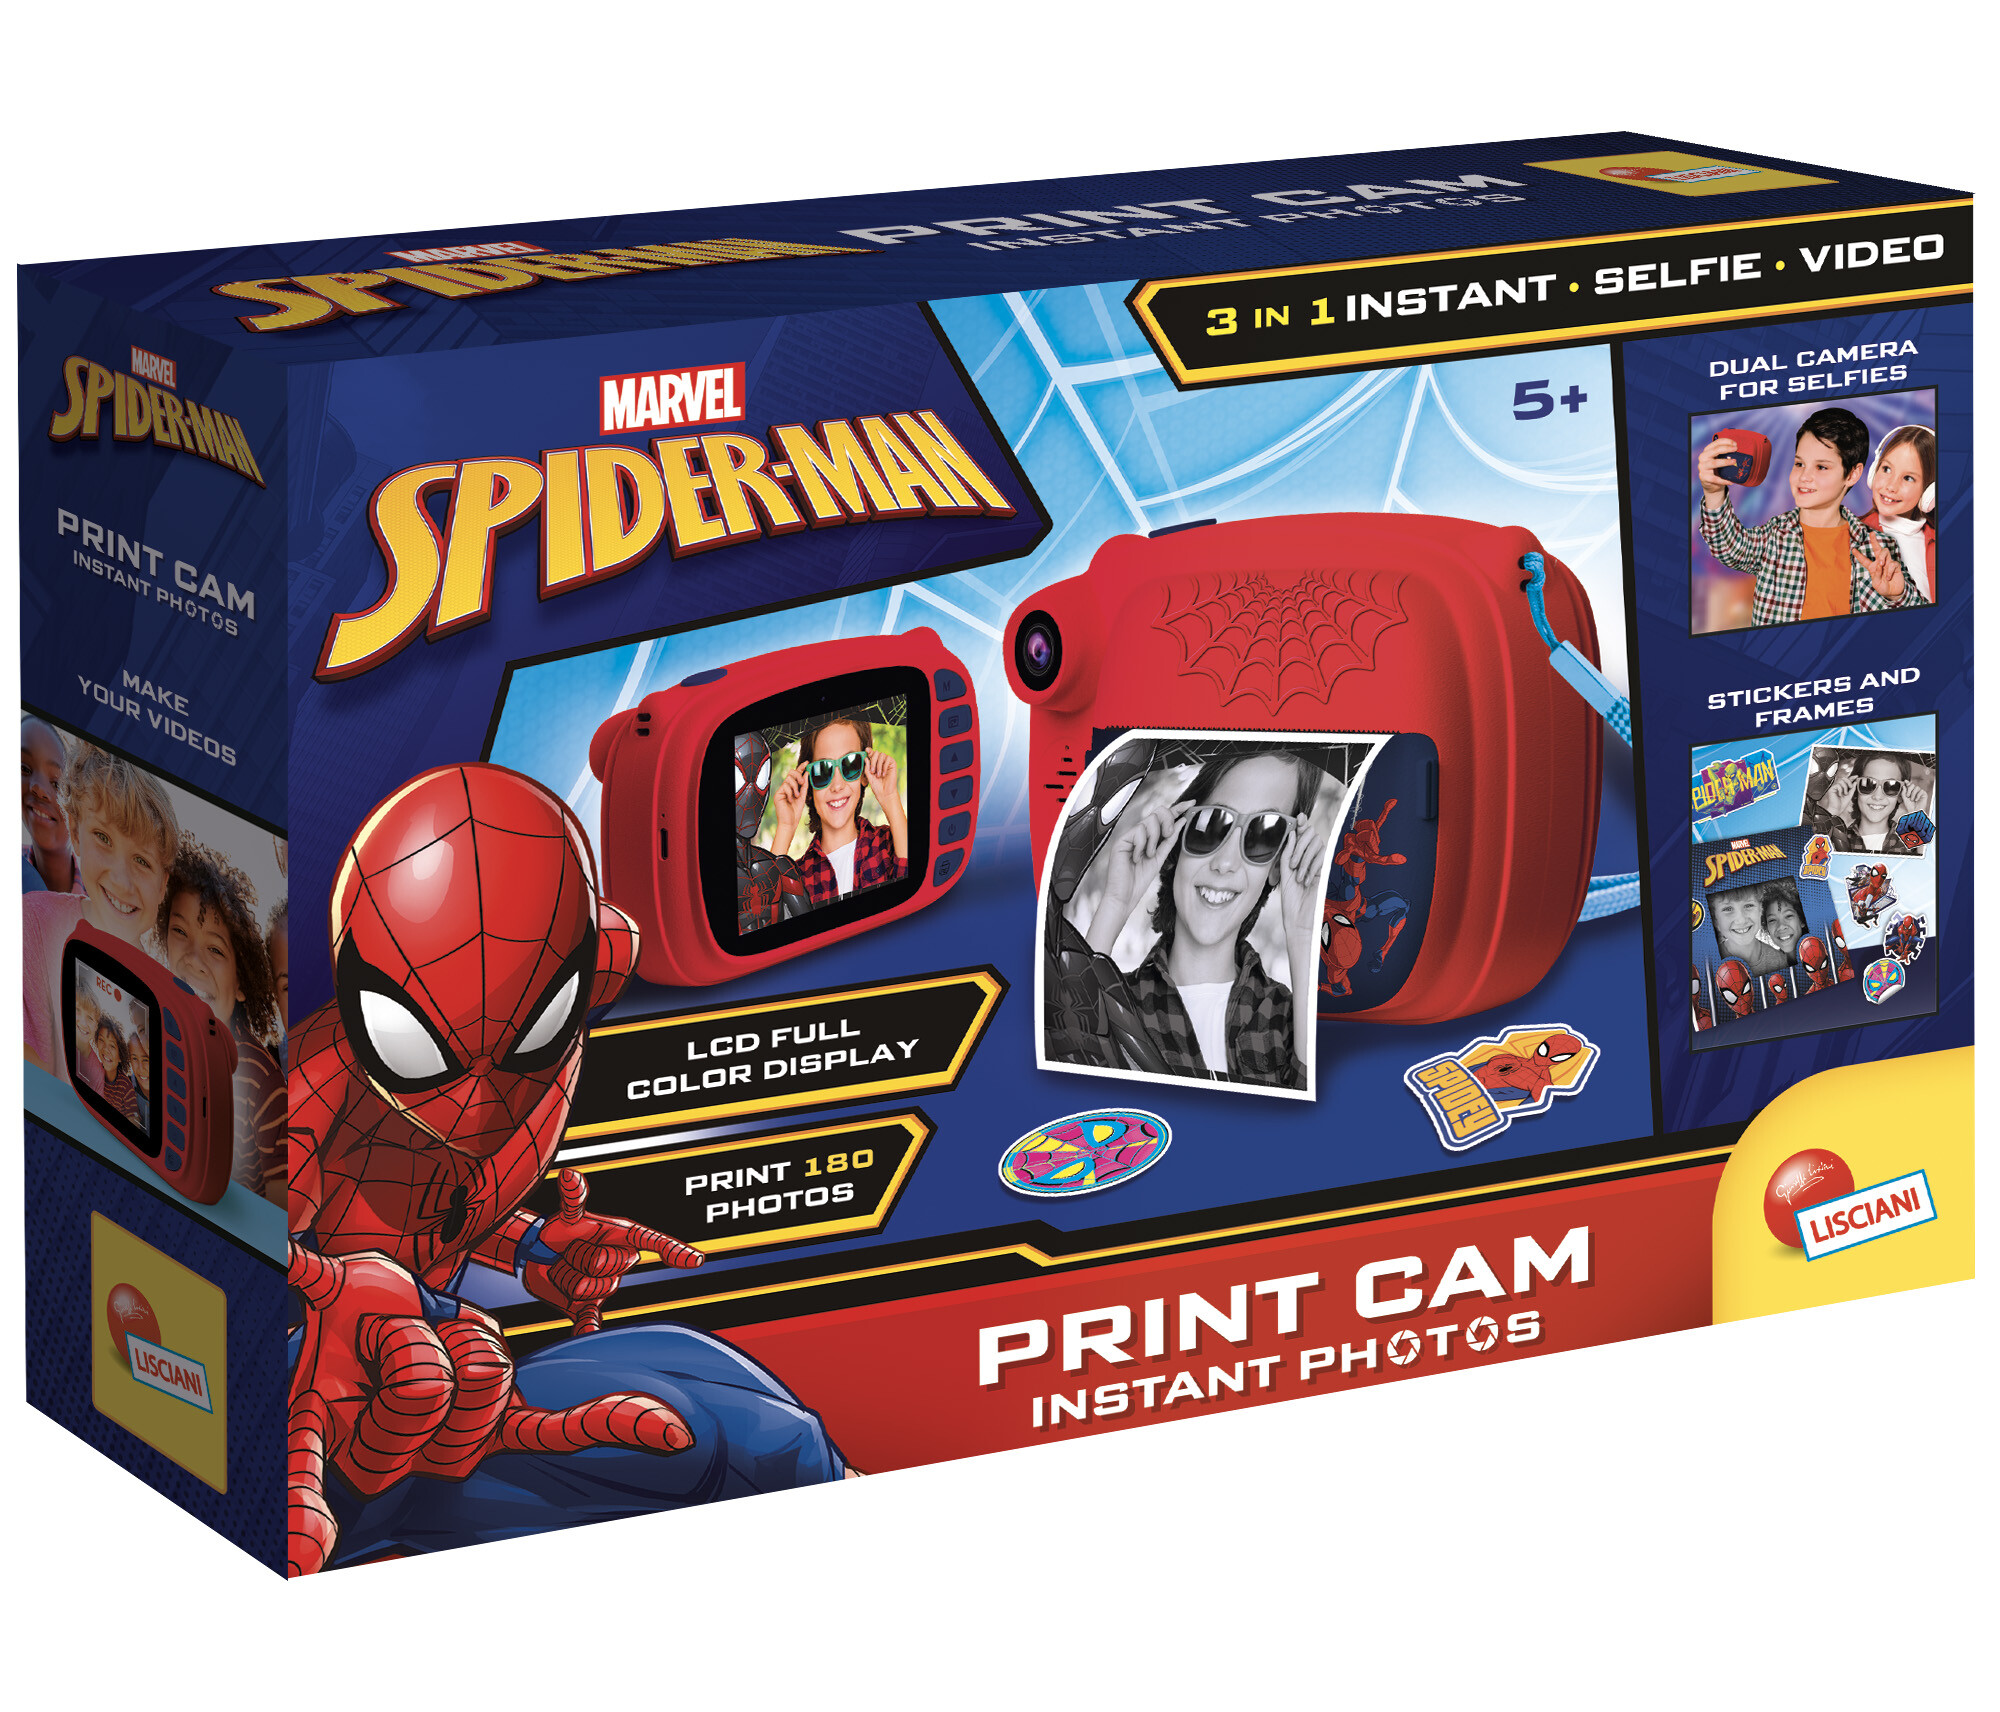 Spider-man print cam - LISCIANI, Avengers, Spiderman